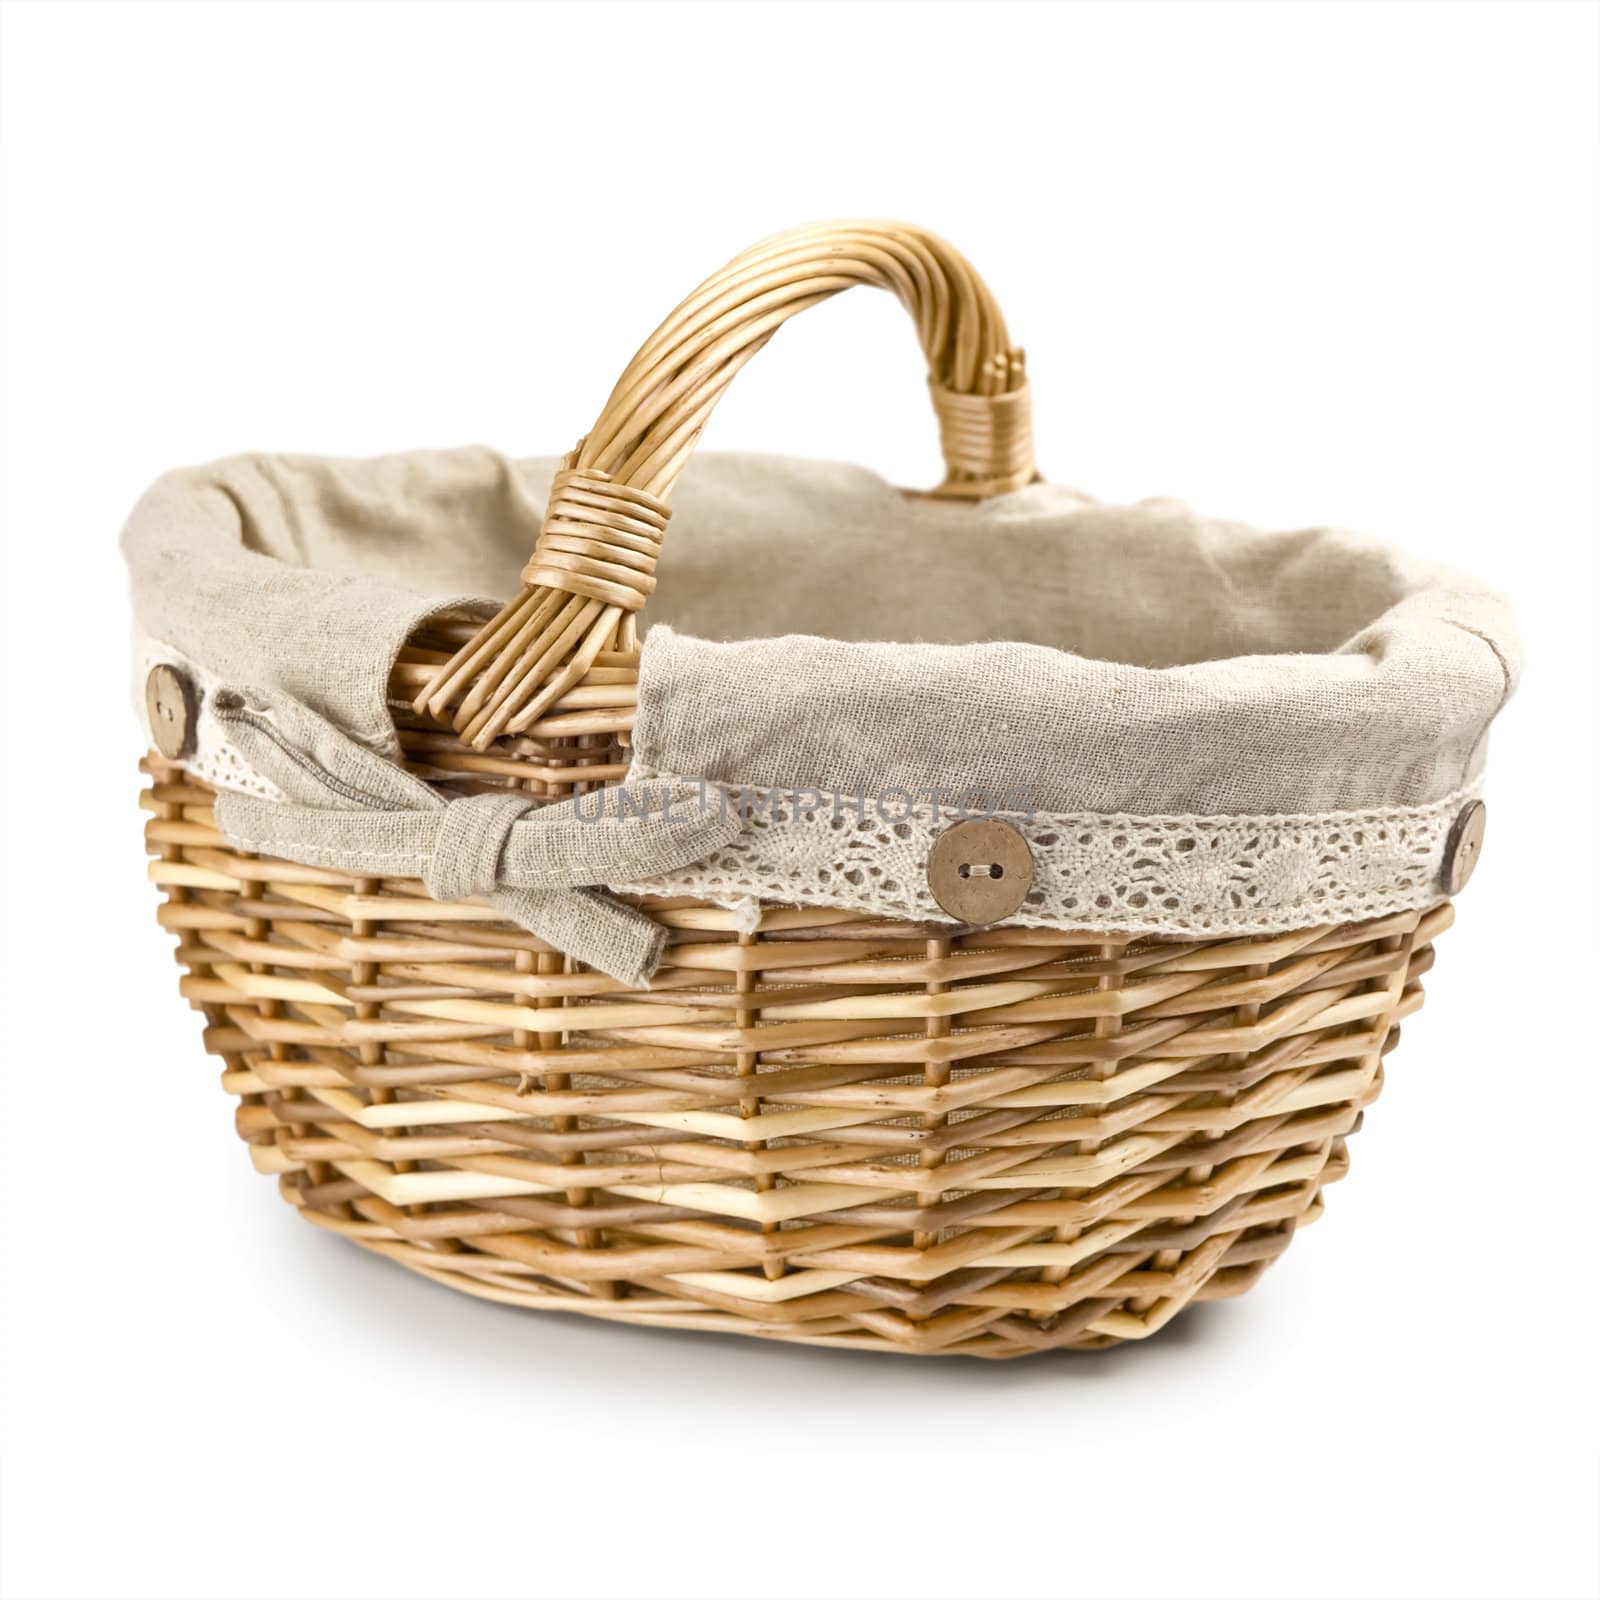 handmade wicker basket over the white background